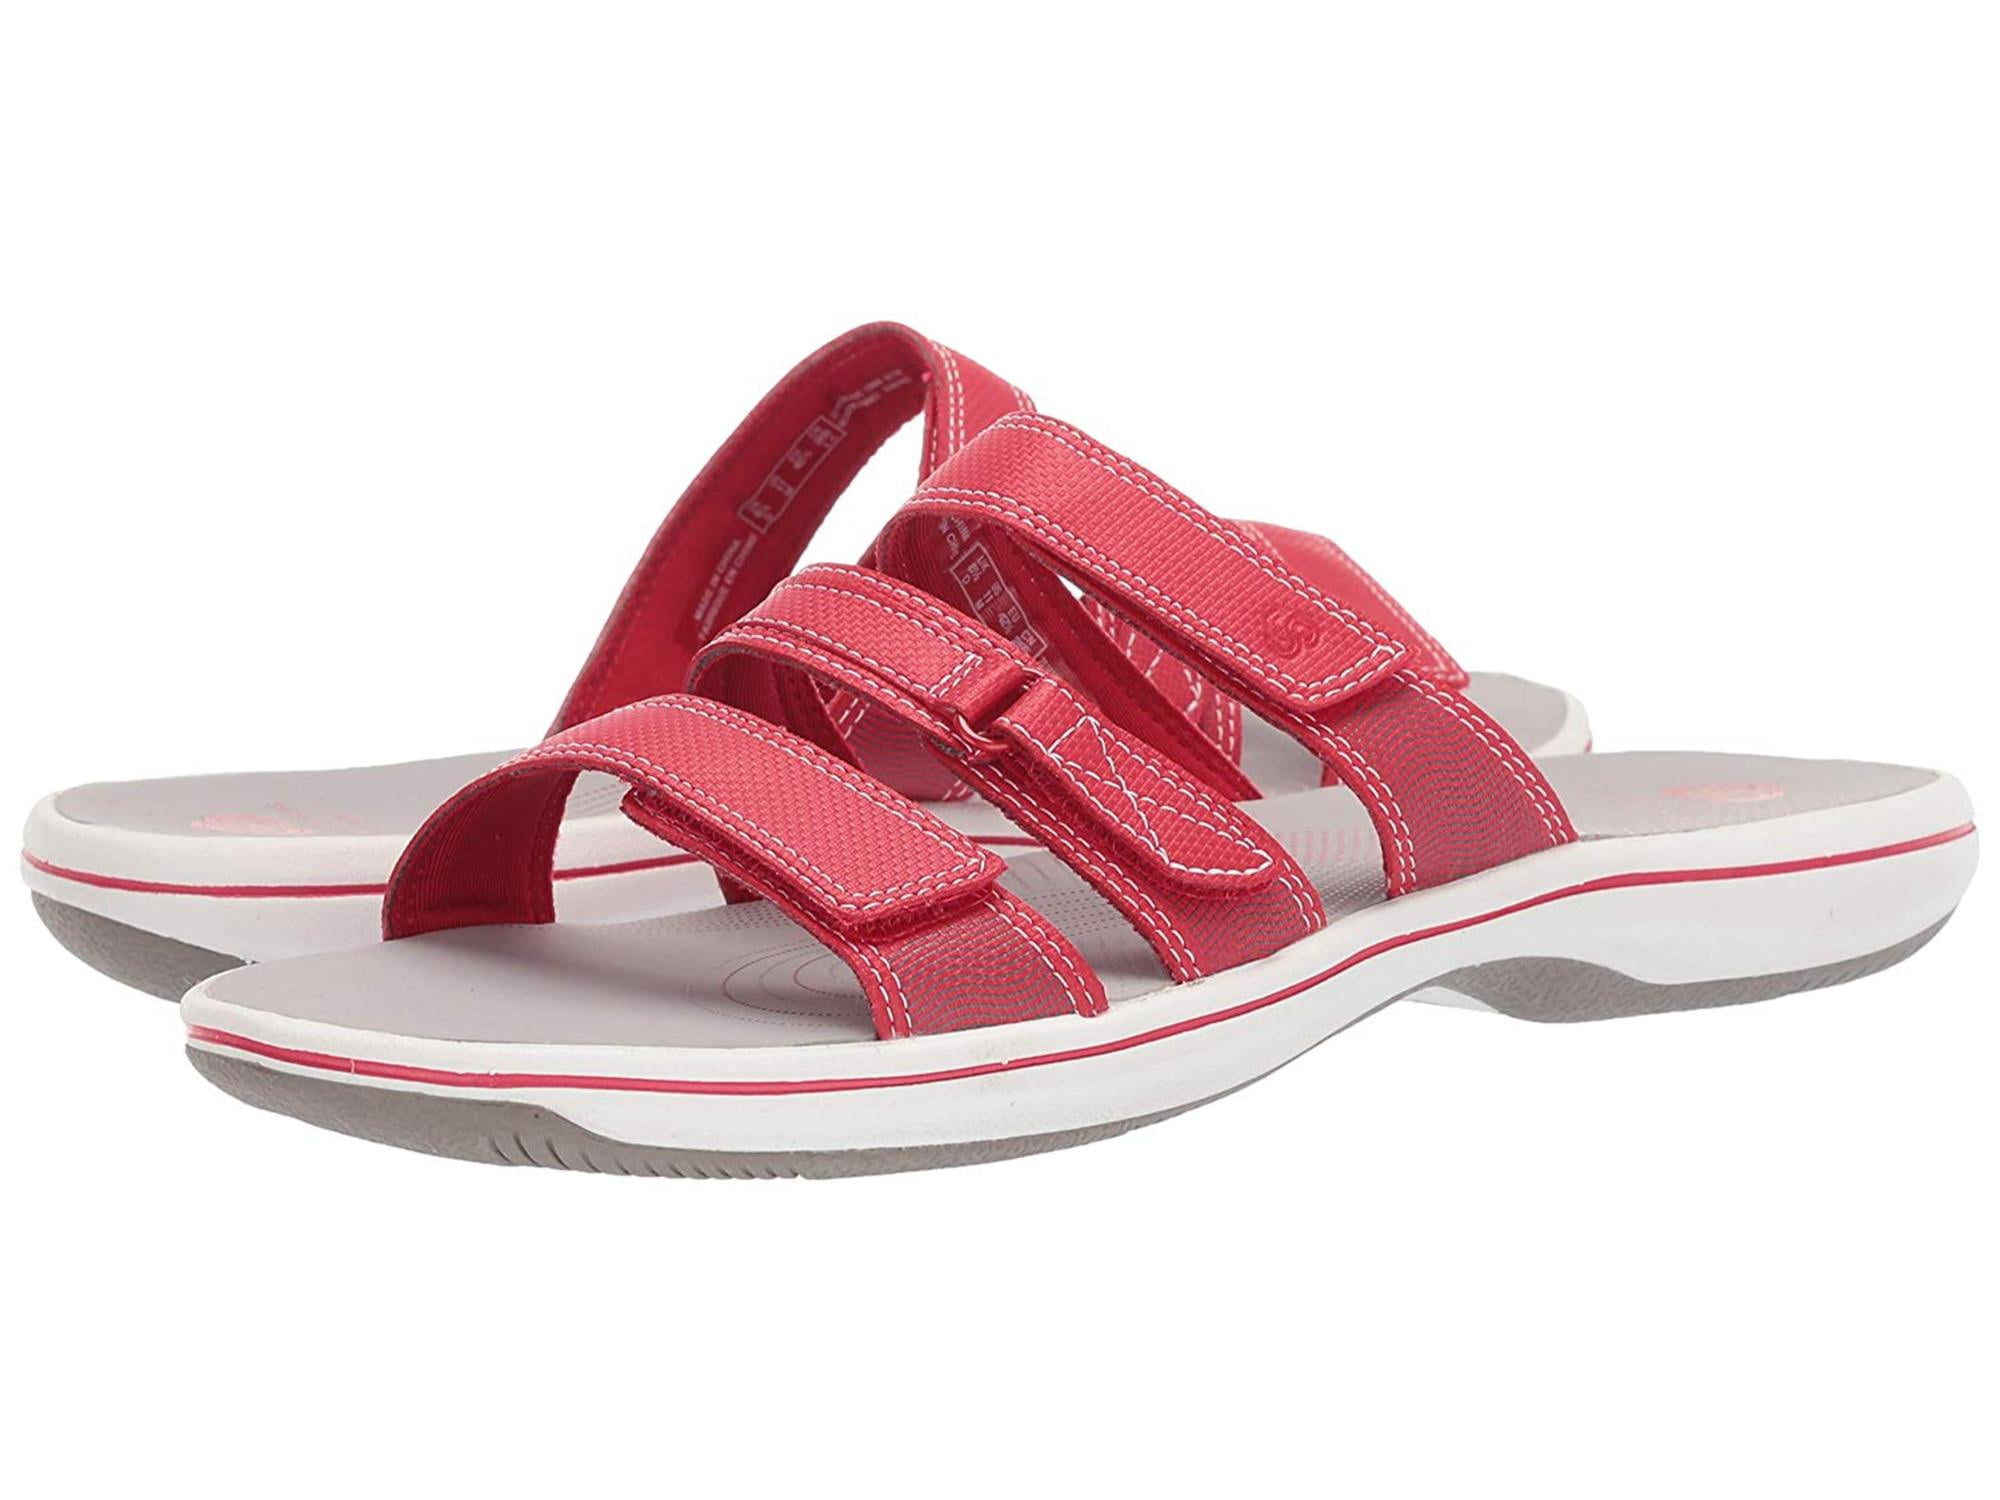 Clarks Womens Brinkley Coast Peep Toe Casual Slide Sandals - Walmart.com